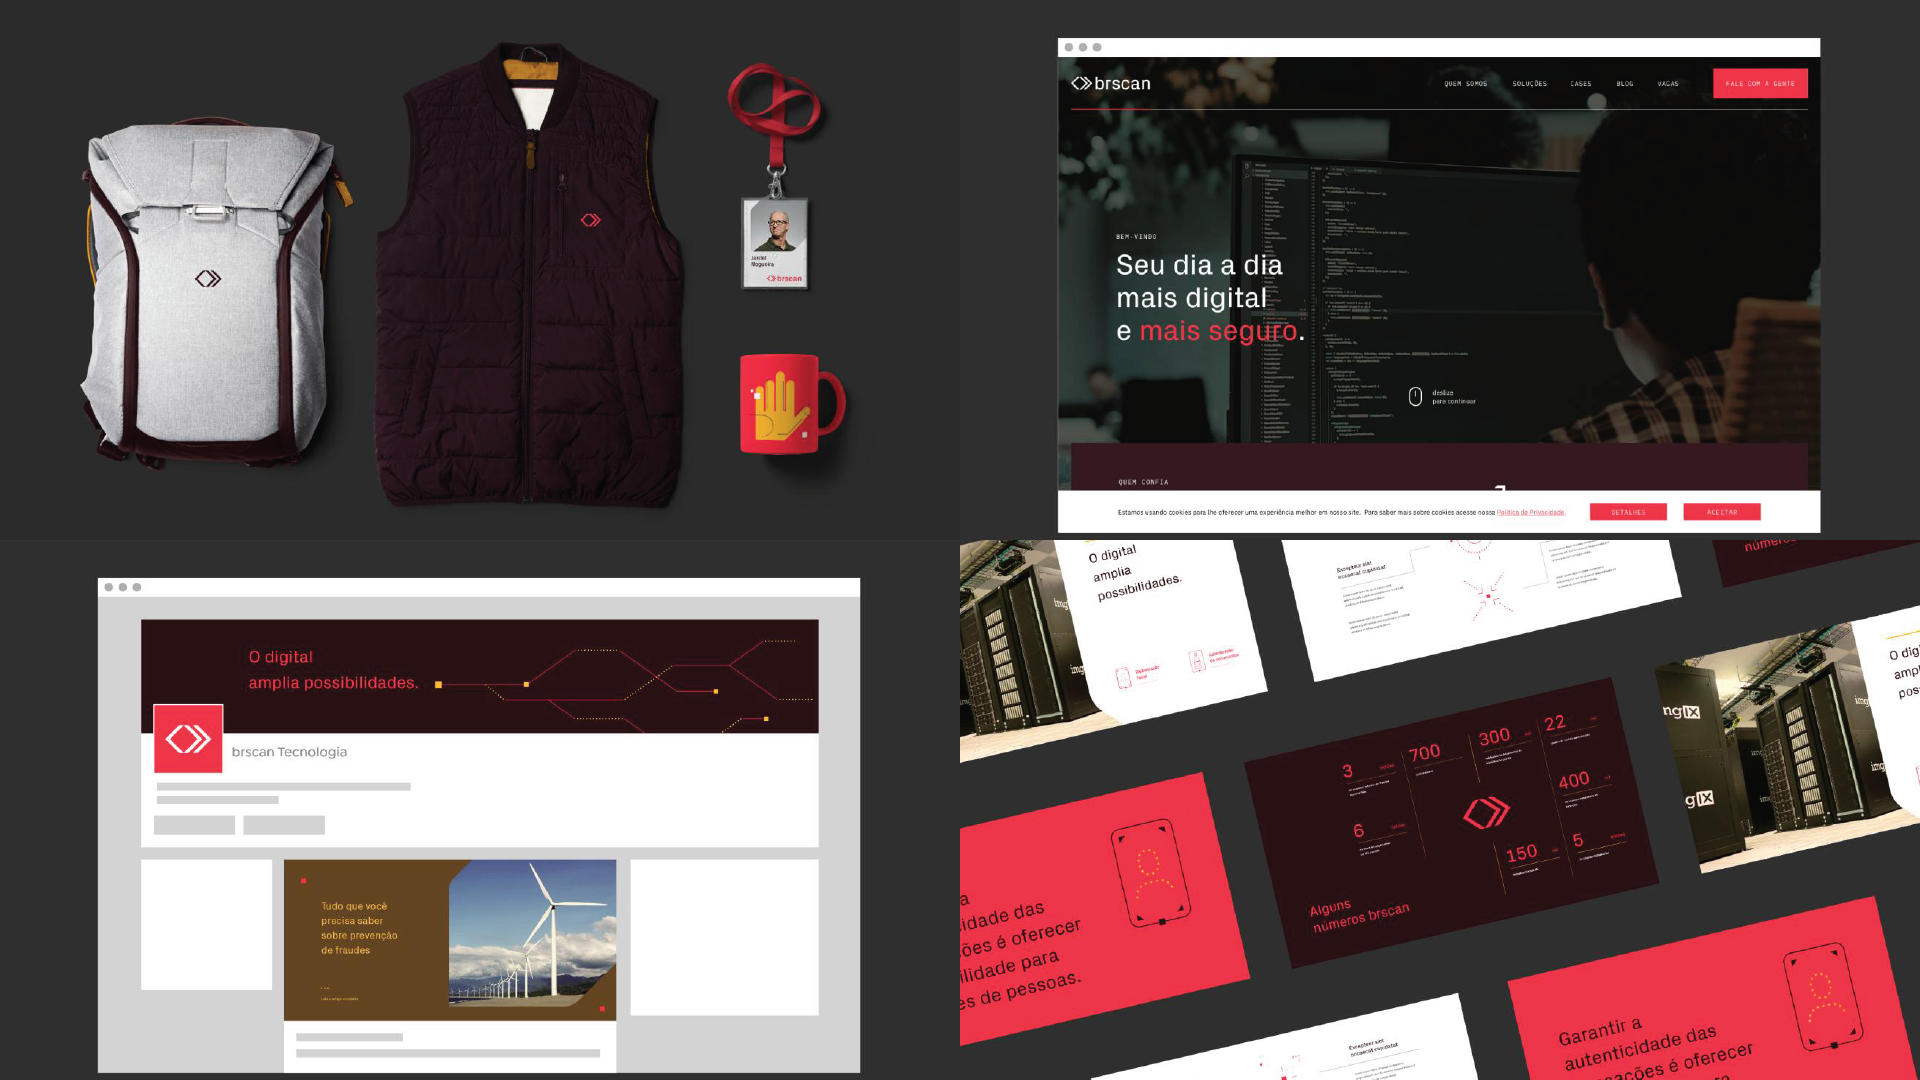 Jib Work Portfolio - Creative Suite Brand Design and Website Development 21